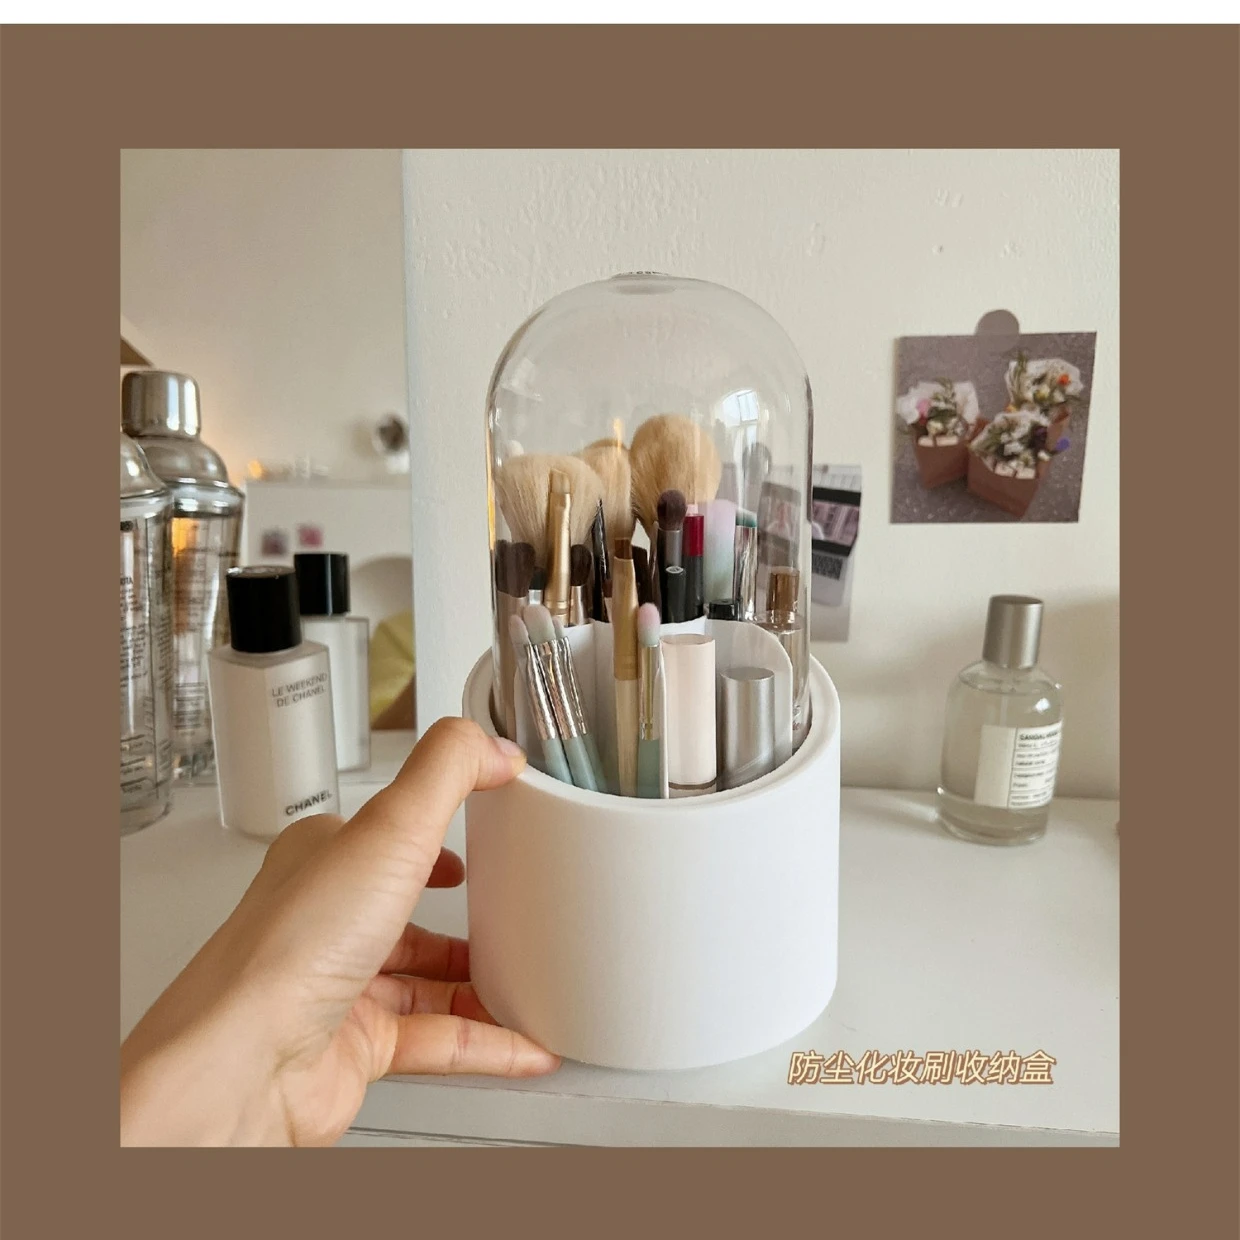 Chanel Makeup Brush Holder 